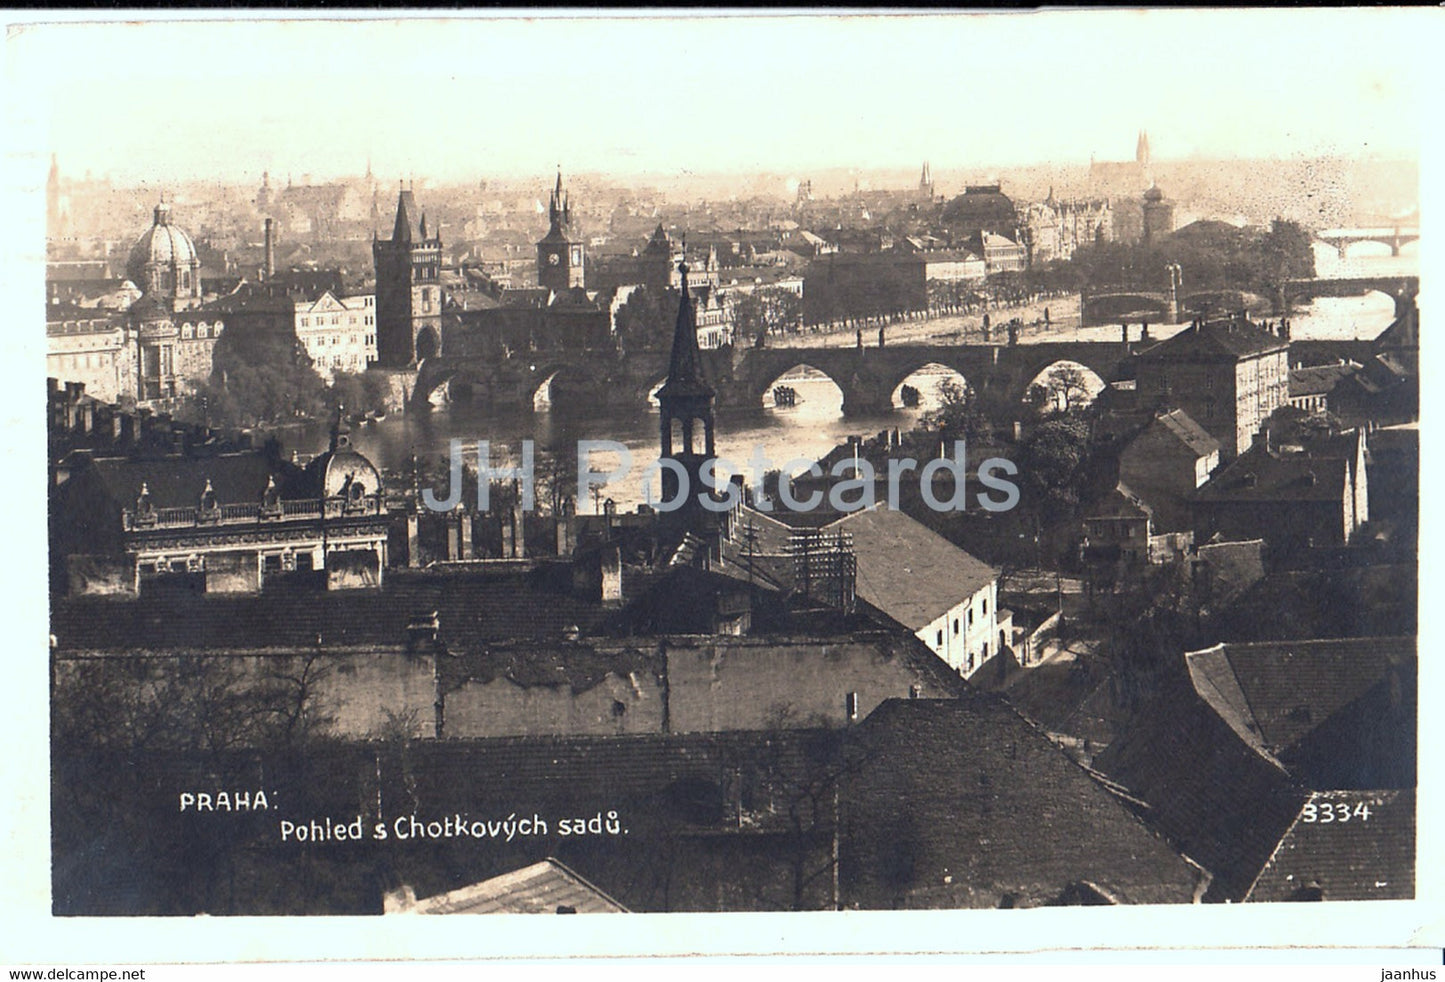 Praha - Prague - Pohled s Chotkovych sadu - 3334 - old postcard - Czech Republic - Czechoslovakia - used - JH Postcards